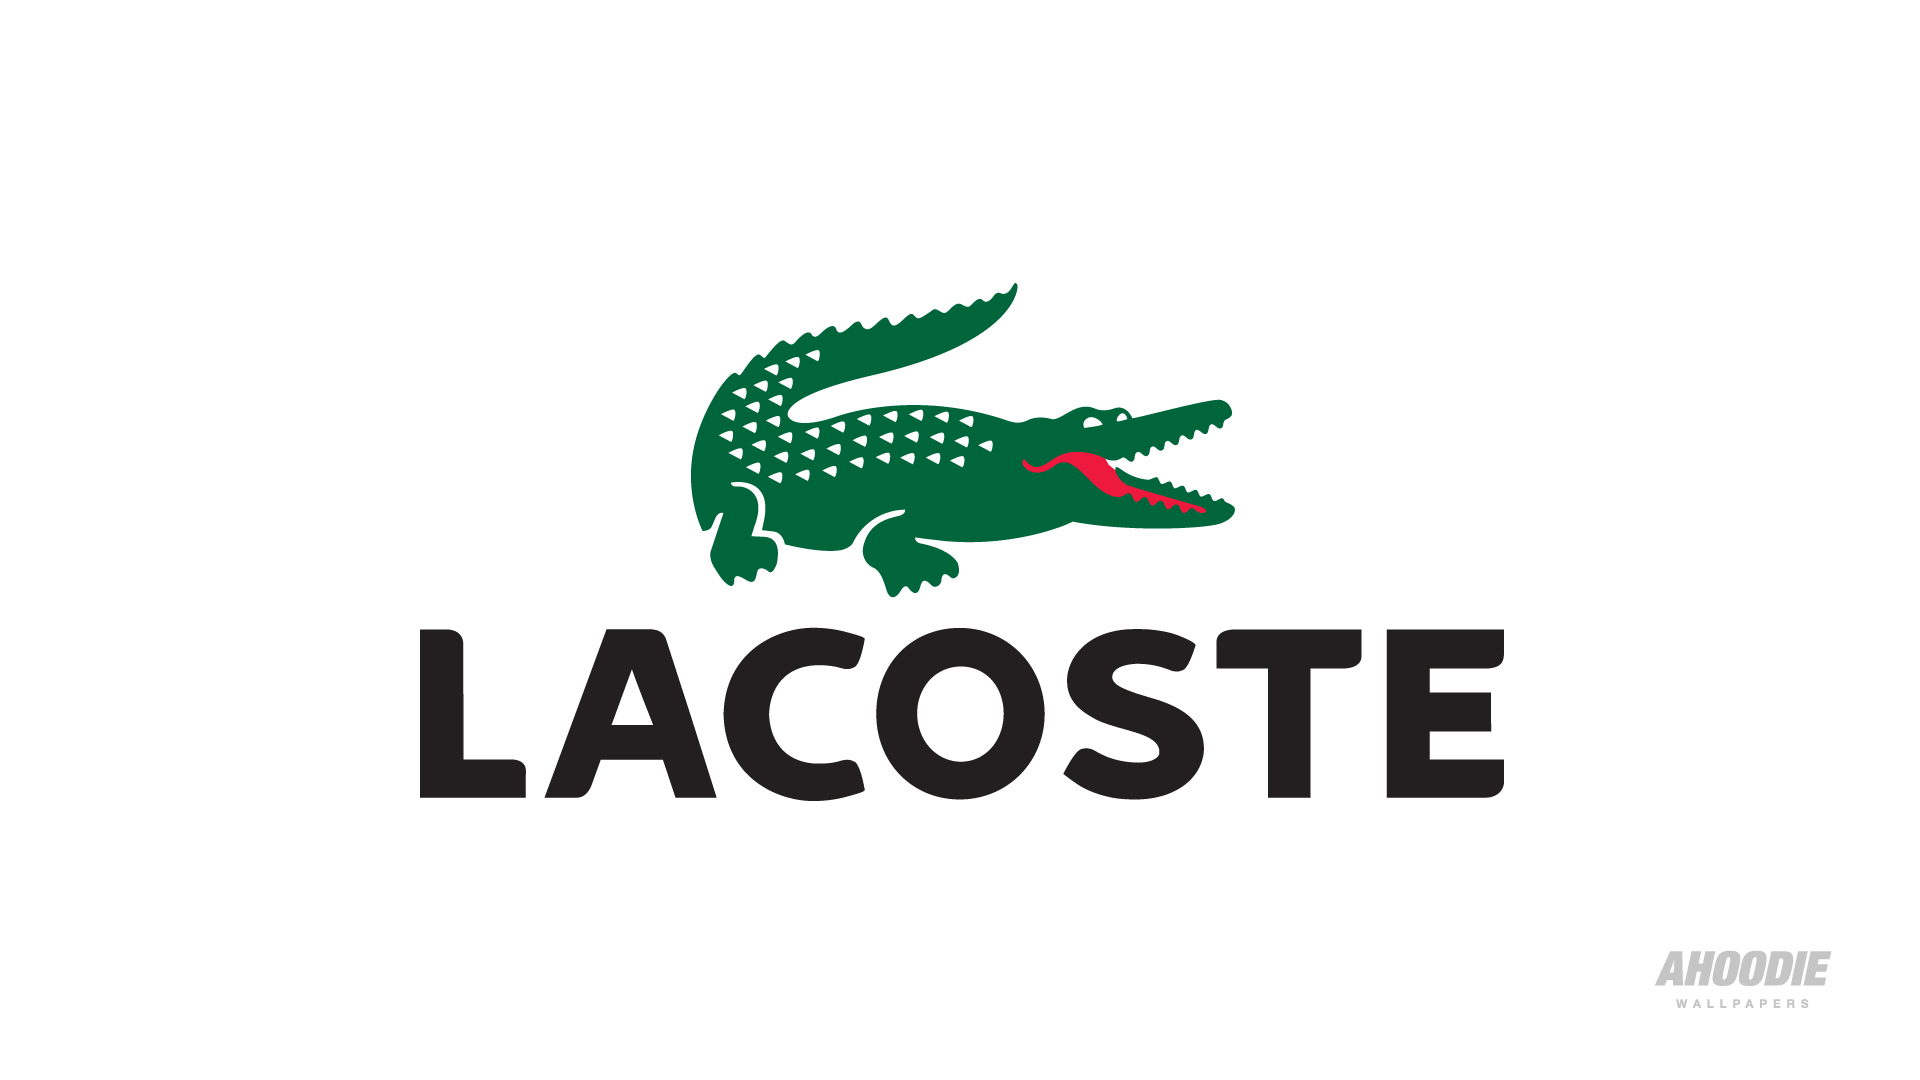 Lacoste Logo Wallpaper 33026 1600x1200 px